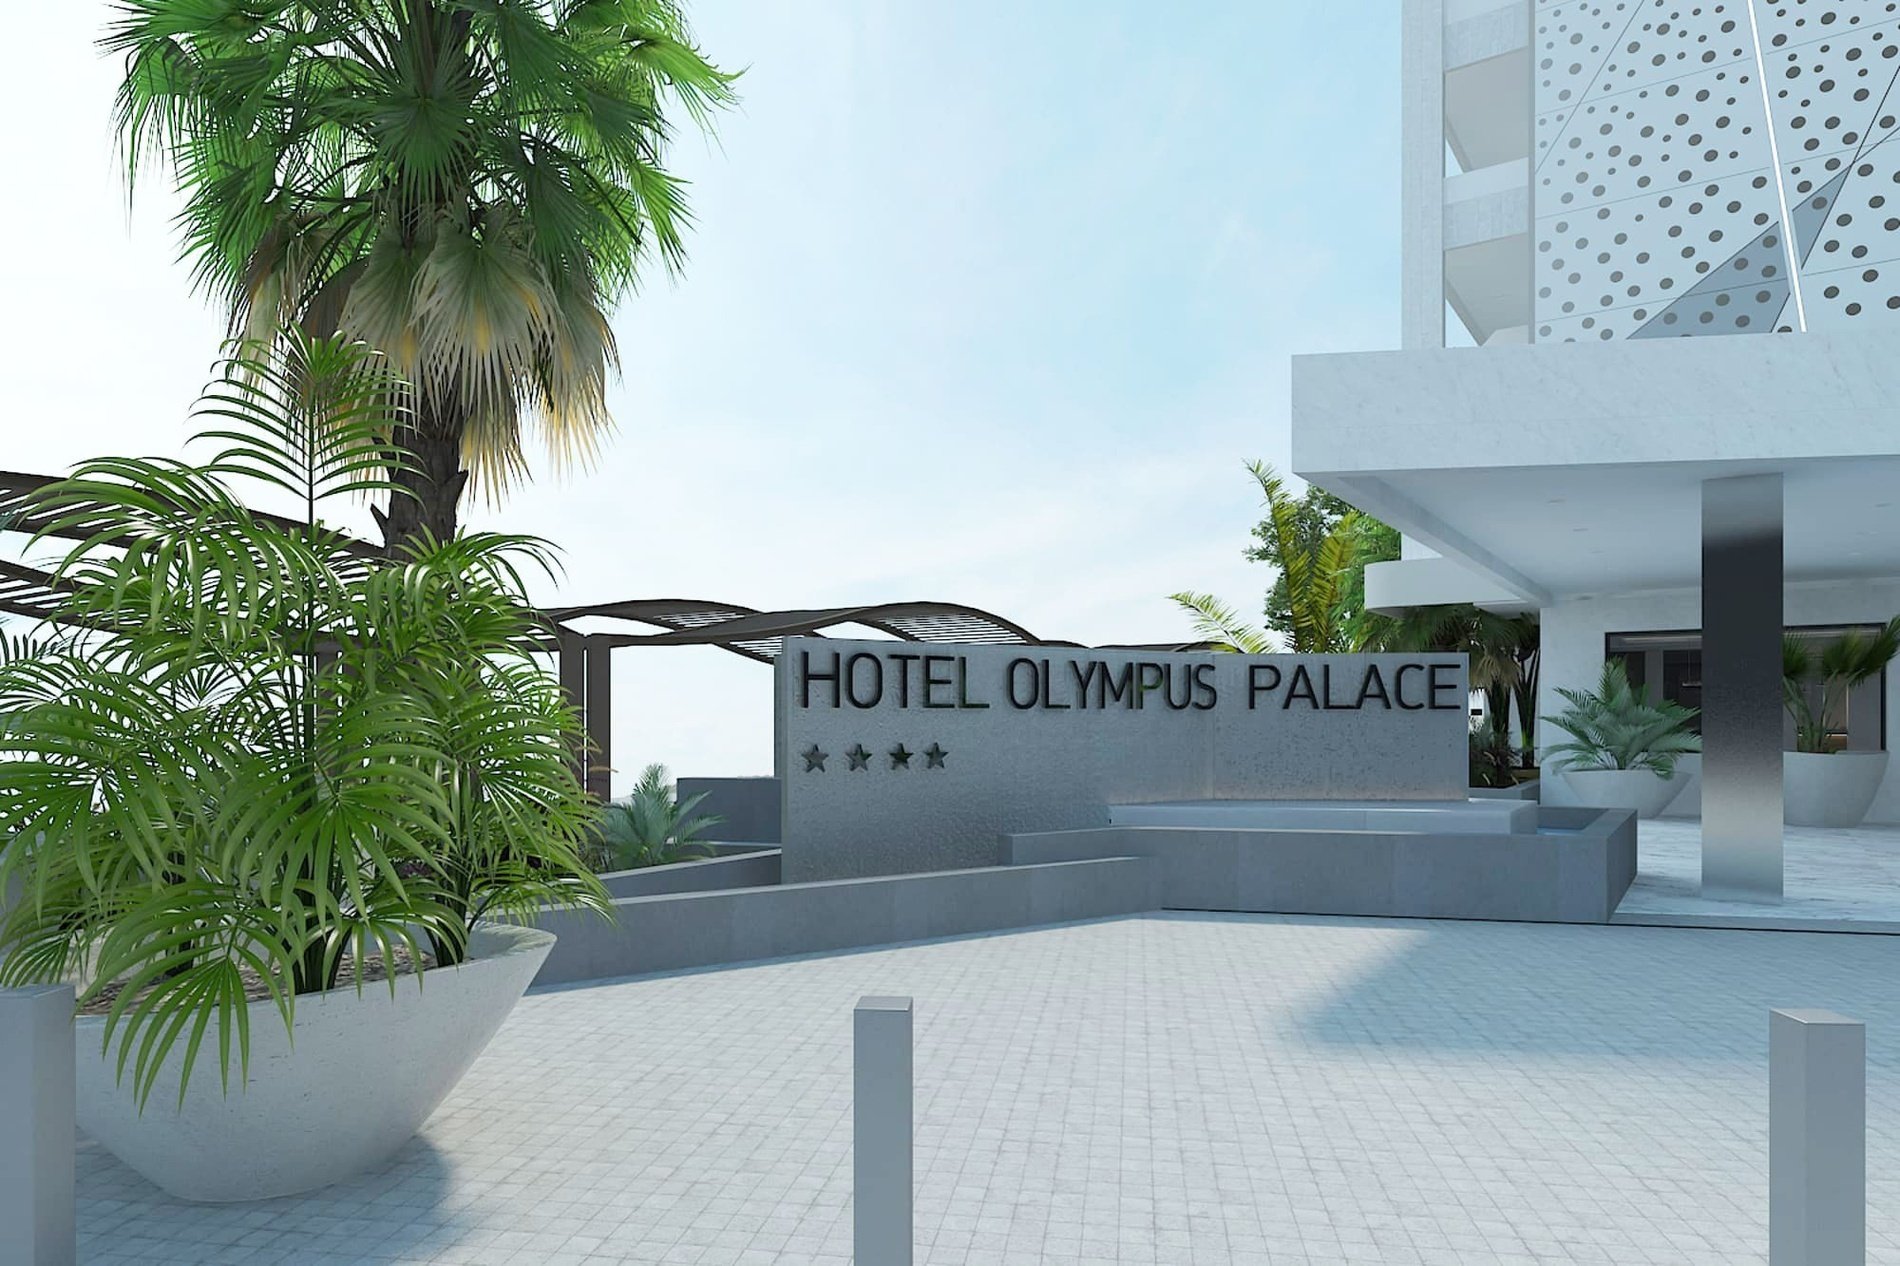 Hotel Olympus Palace **** | Salou, Costa Dorada | Web Oficial